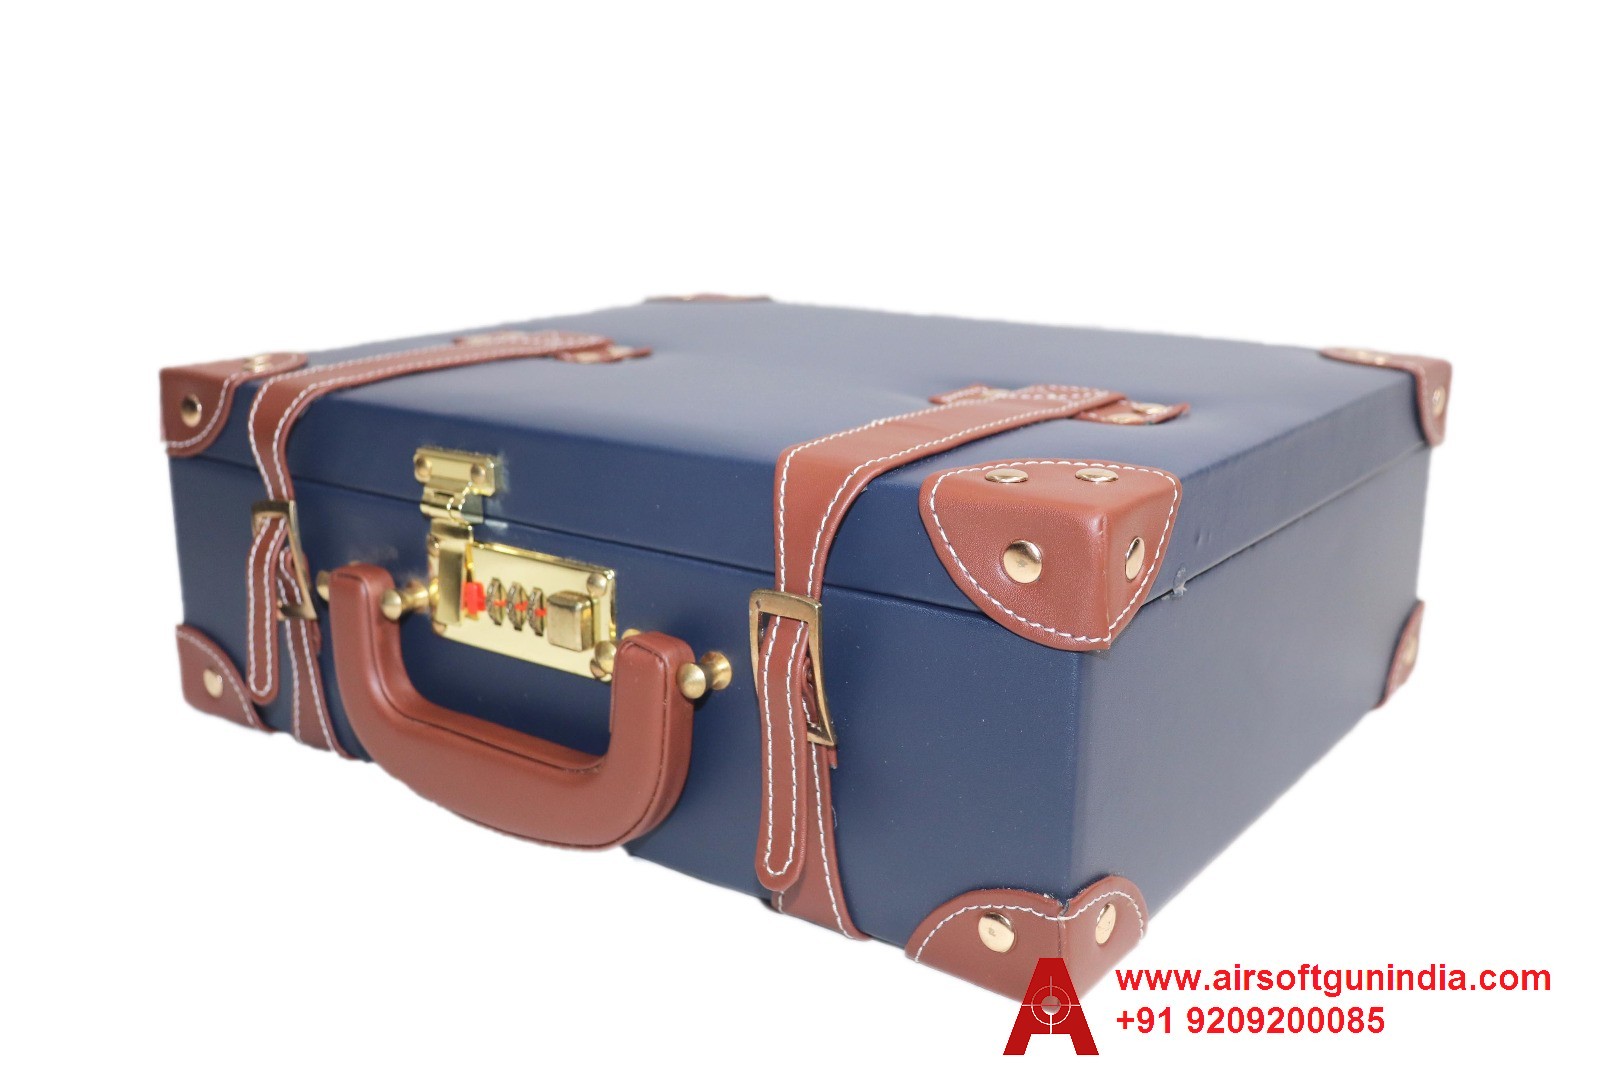 Vintage Retro Luxury Suitcase/Gun Box In Blue Shade By Airsoft Gun India